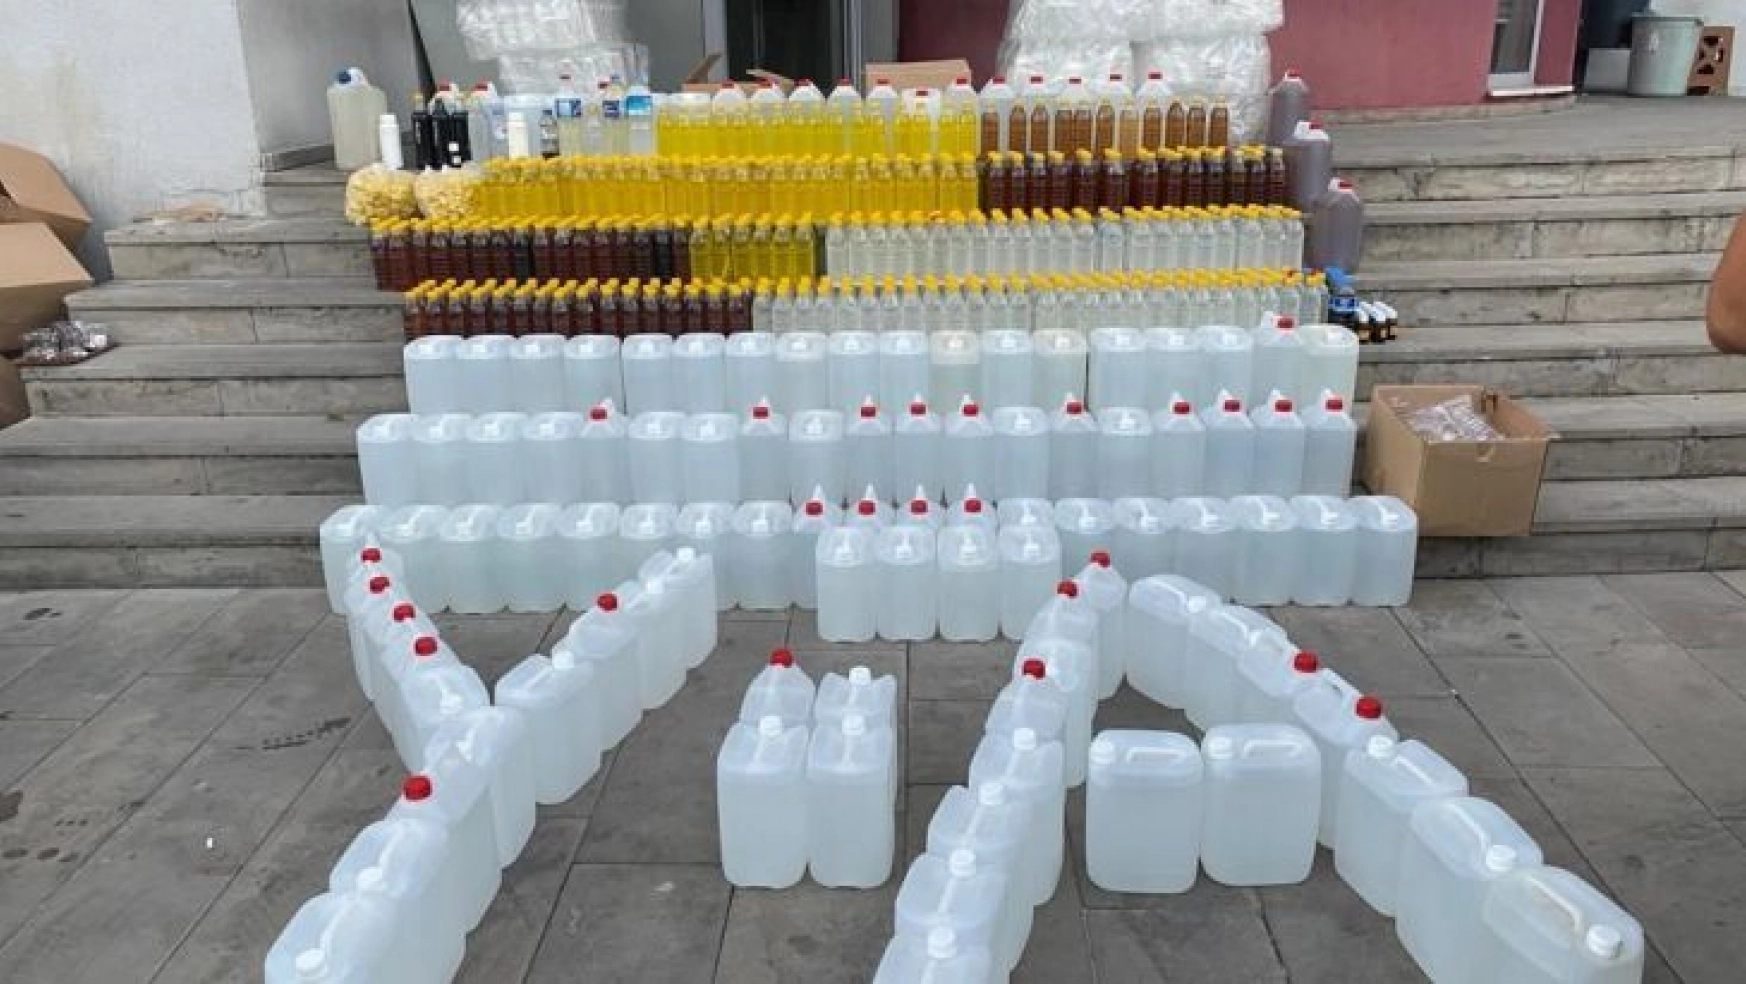 Adana'da 275 litre sahte içki ele geçirildi